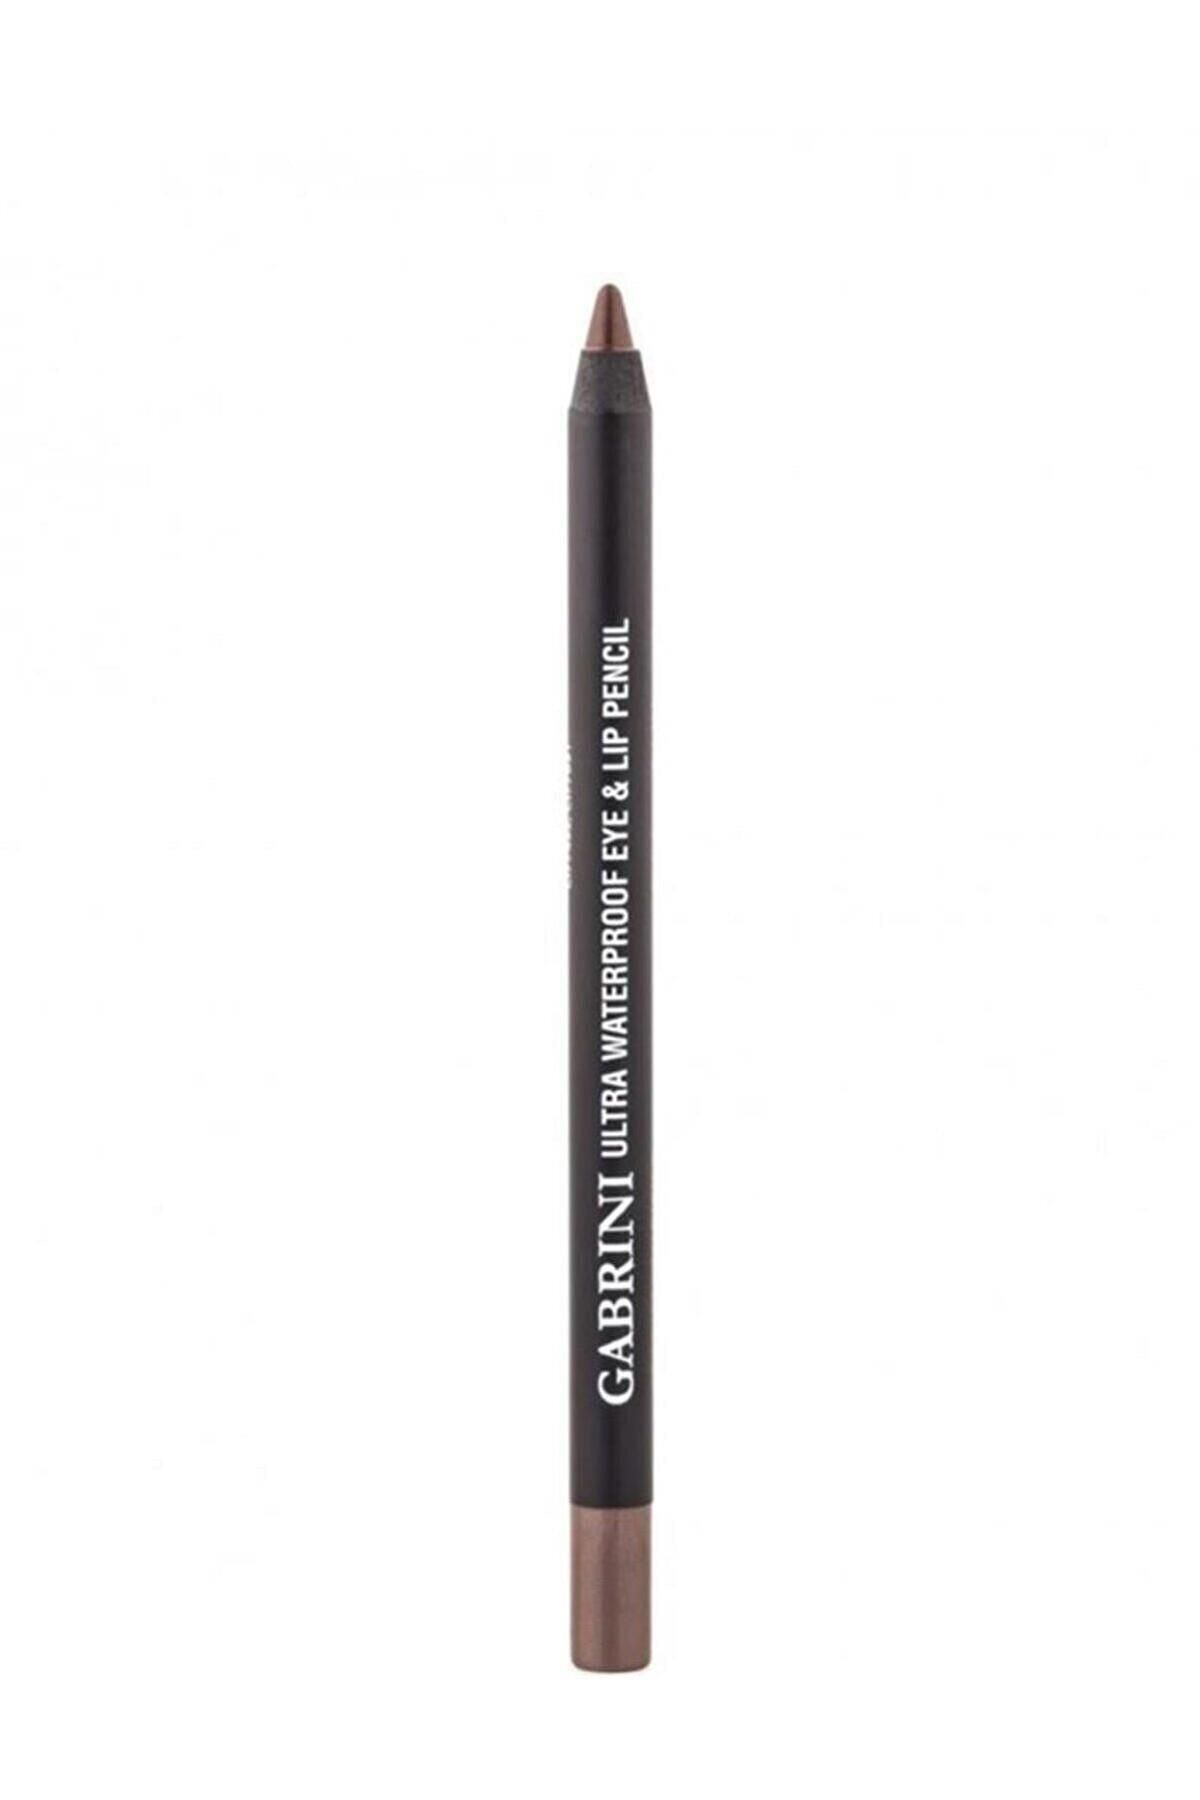 Gabrini Ultra Waterproof Eye & Lip Pencil 18